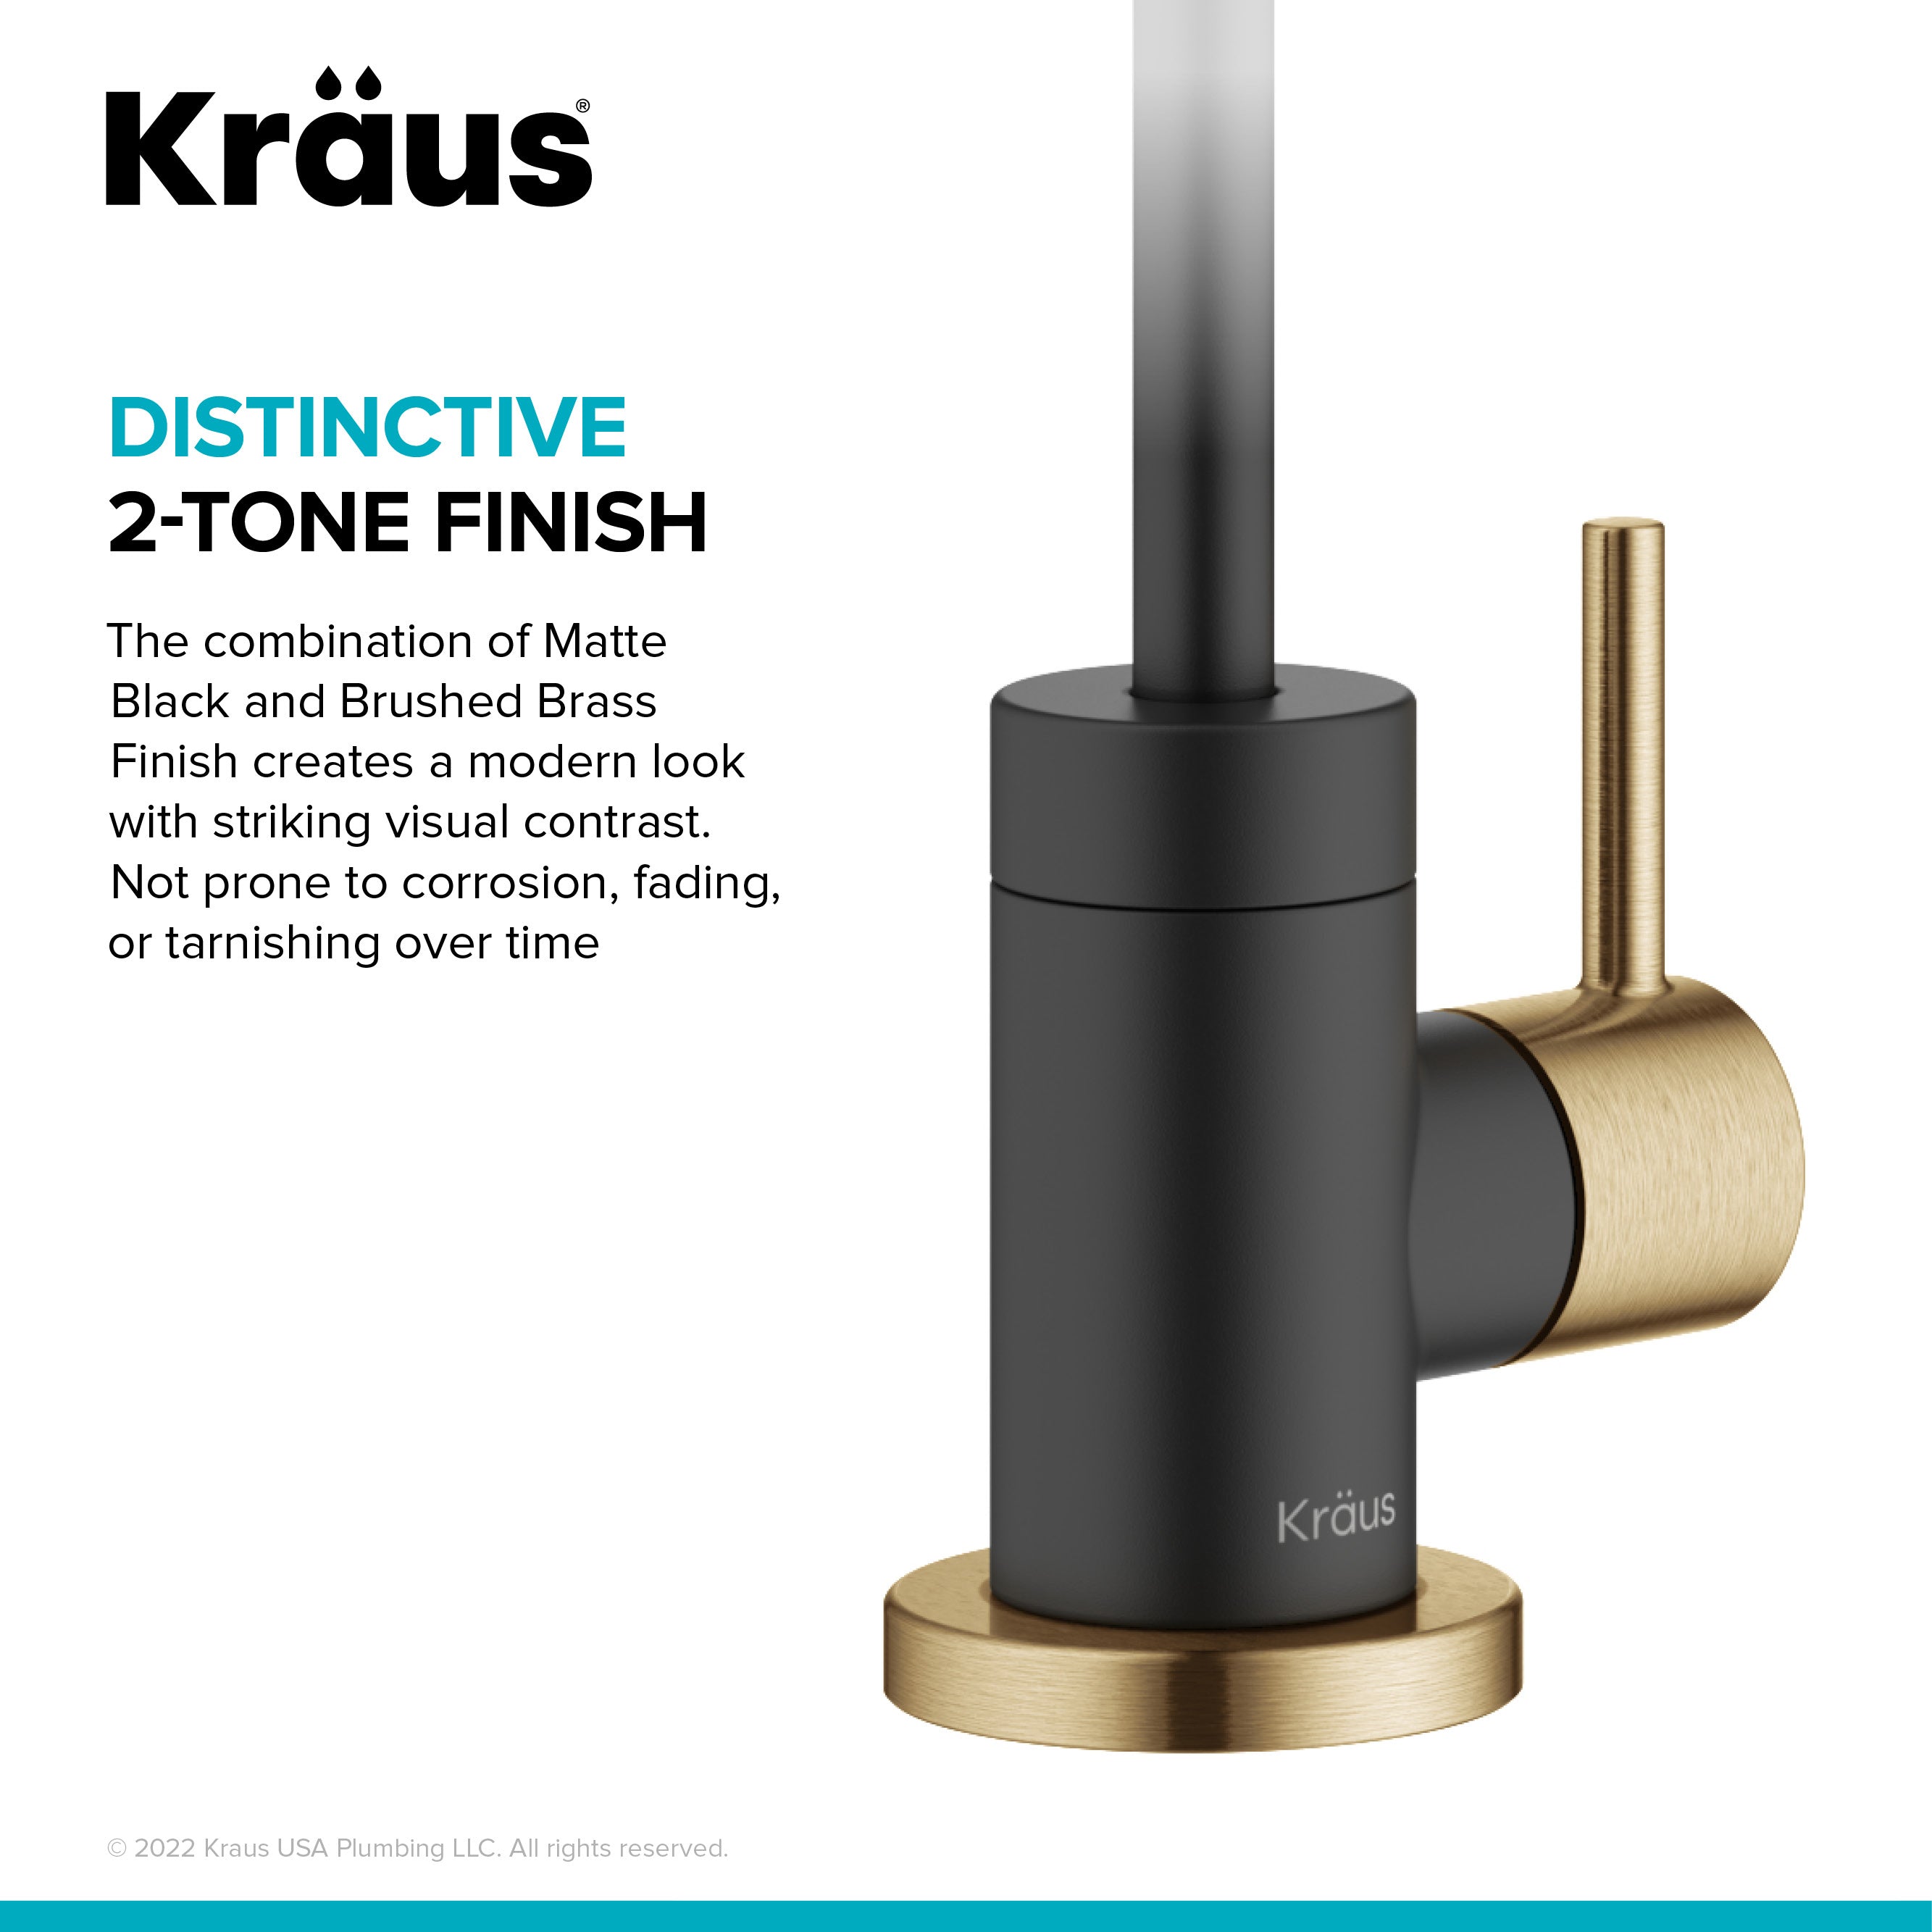 KRAUS Purita 100% Lead-Free Kitchen Water Filter Faucet in Brushed Gold